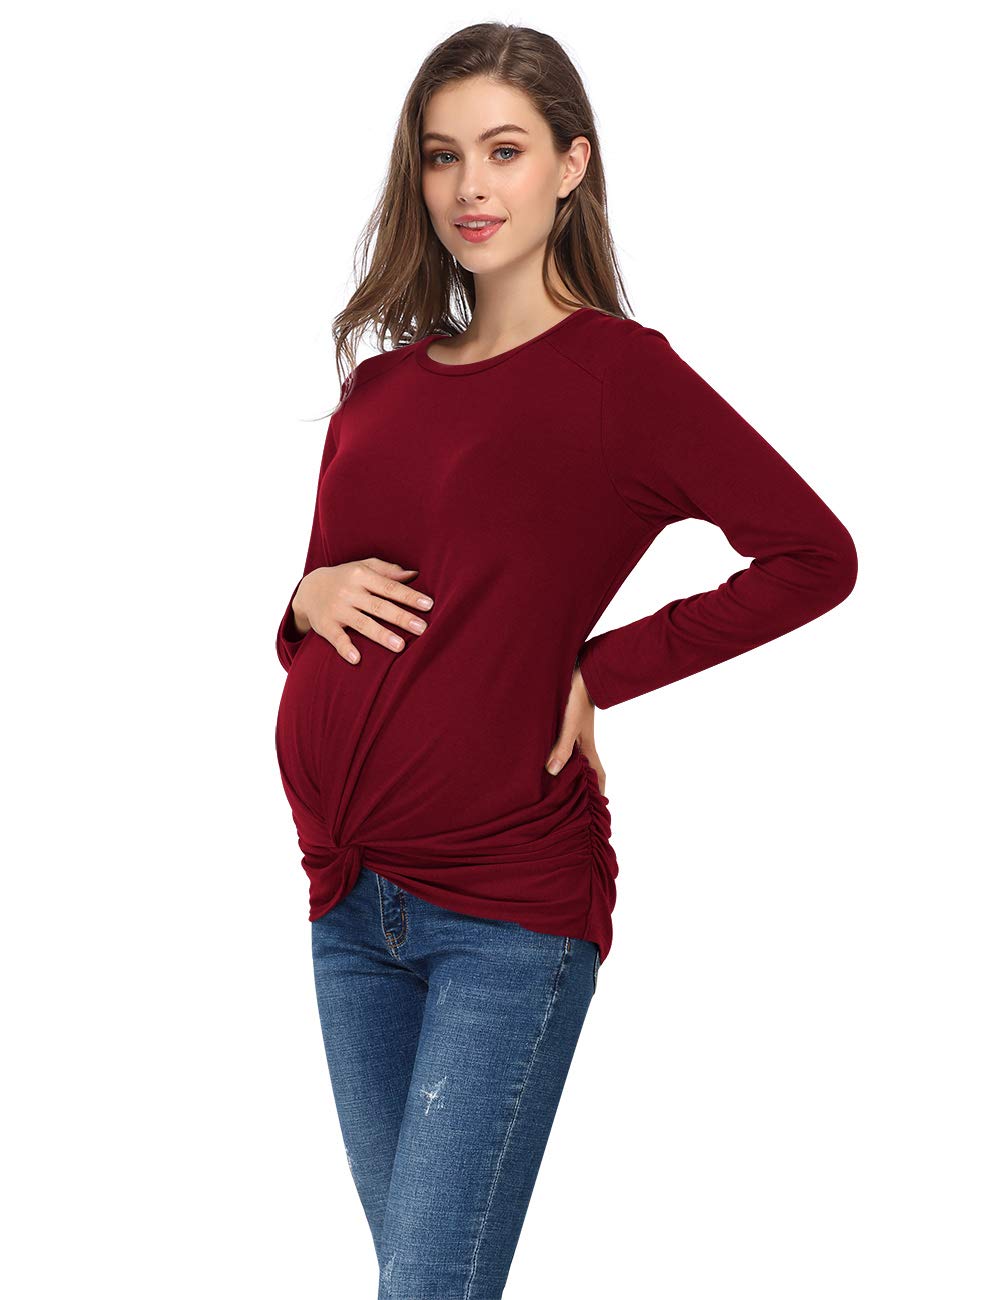 Maternity Shirt Women's Casual T Shirts Twist Knotted Tops Blouse Tunic T-Shirts